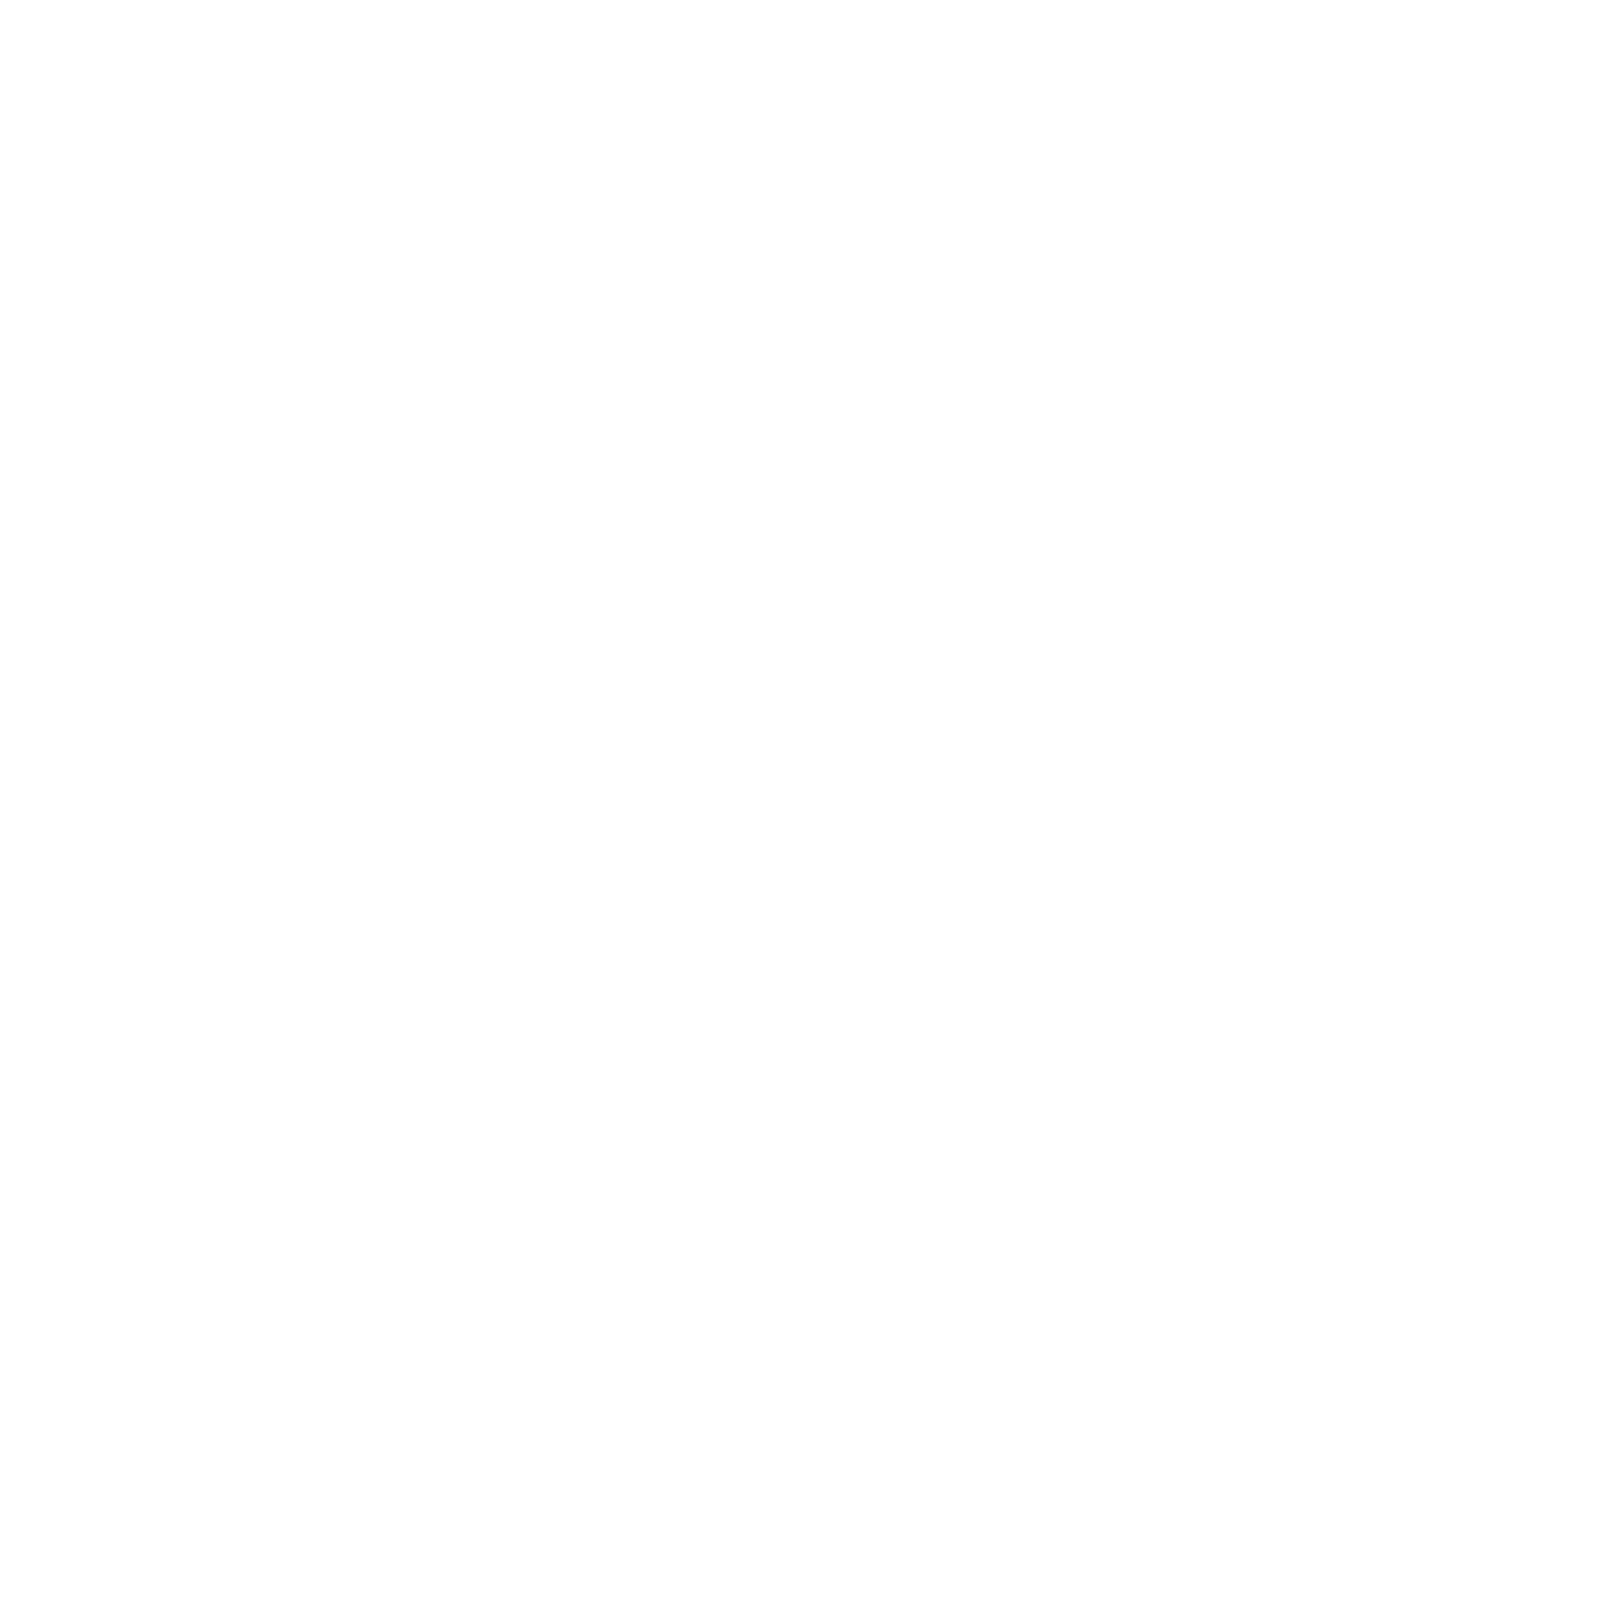 Quarantine logo on a transparent backdrop.